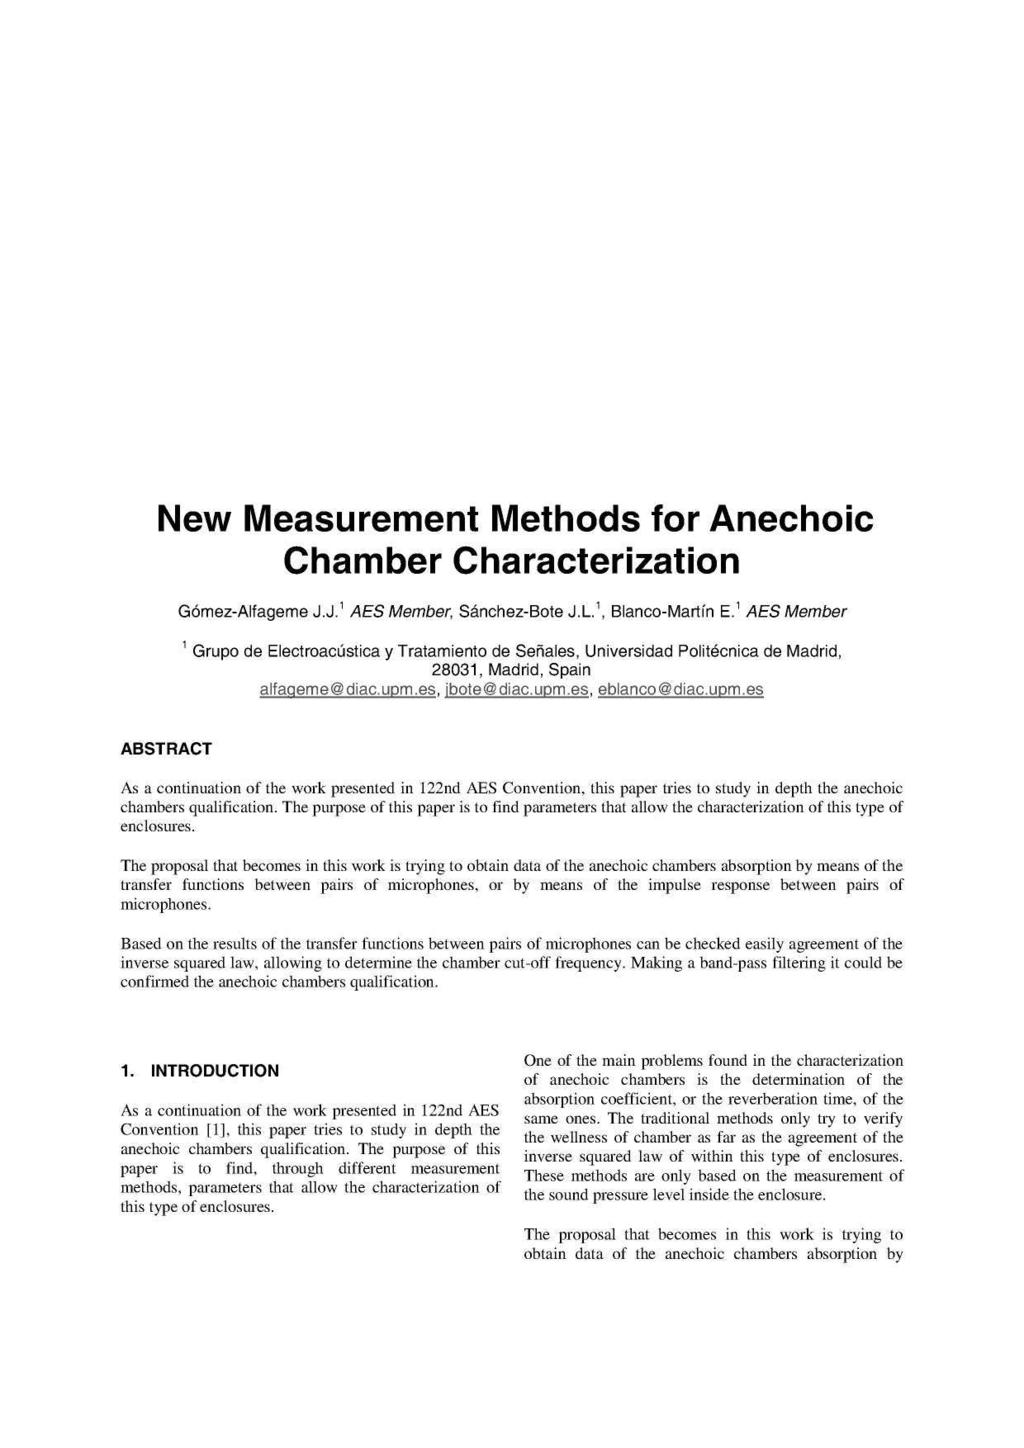 New Measurement Methods for Anechoc Chamber Characterzaton Gomez-Alfageme J.J. AES Member, Sanchez-Bote J.L, Blanco-Martfn E.